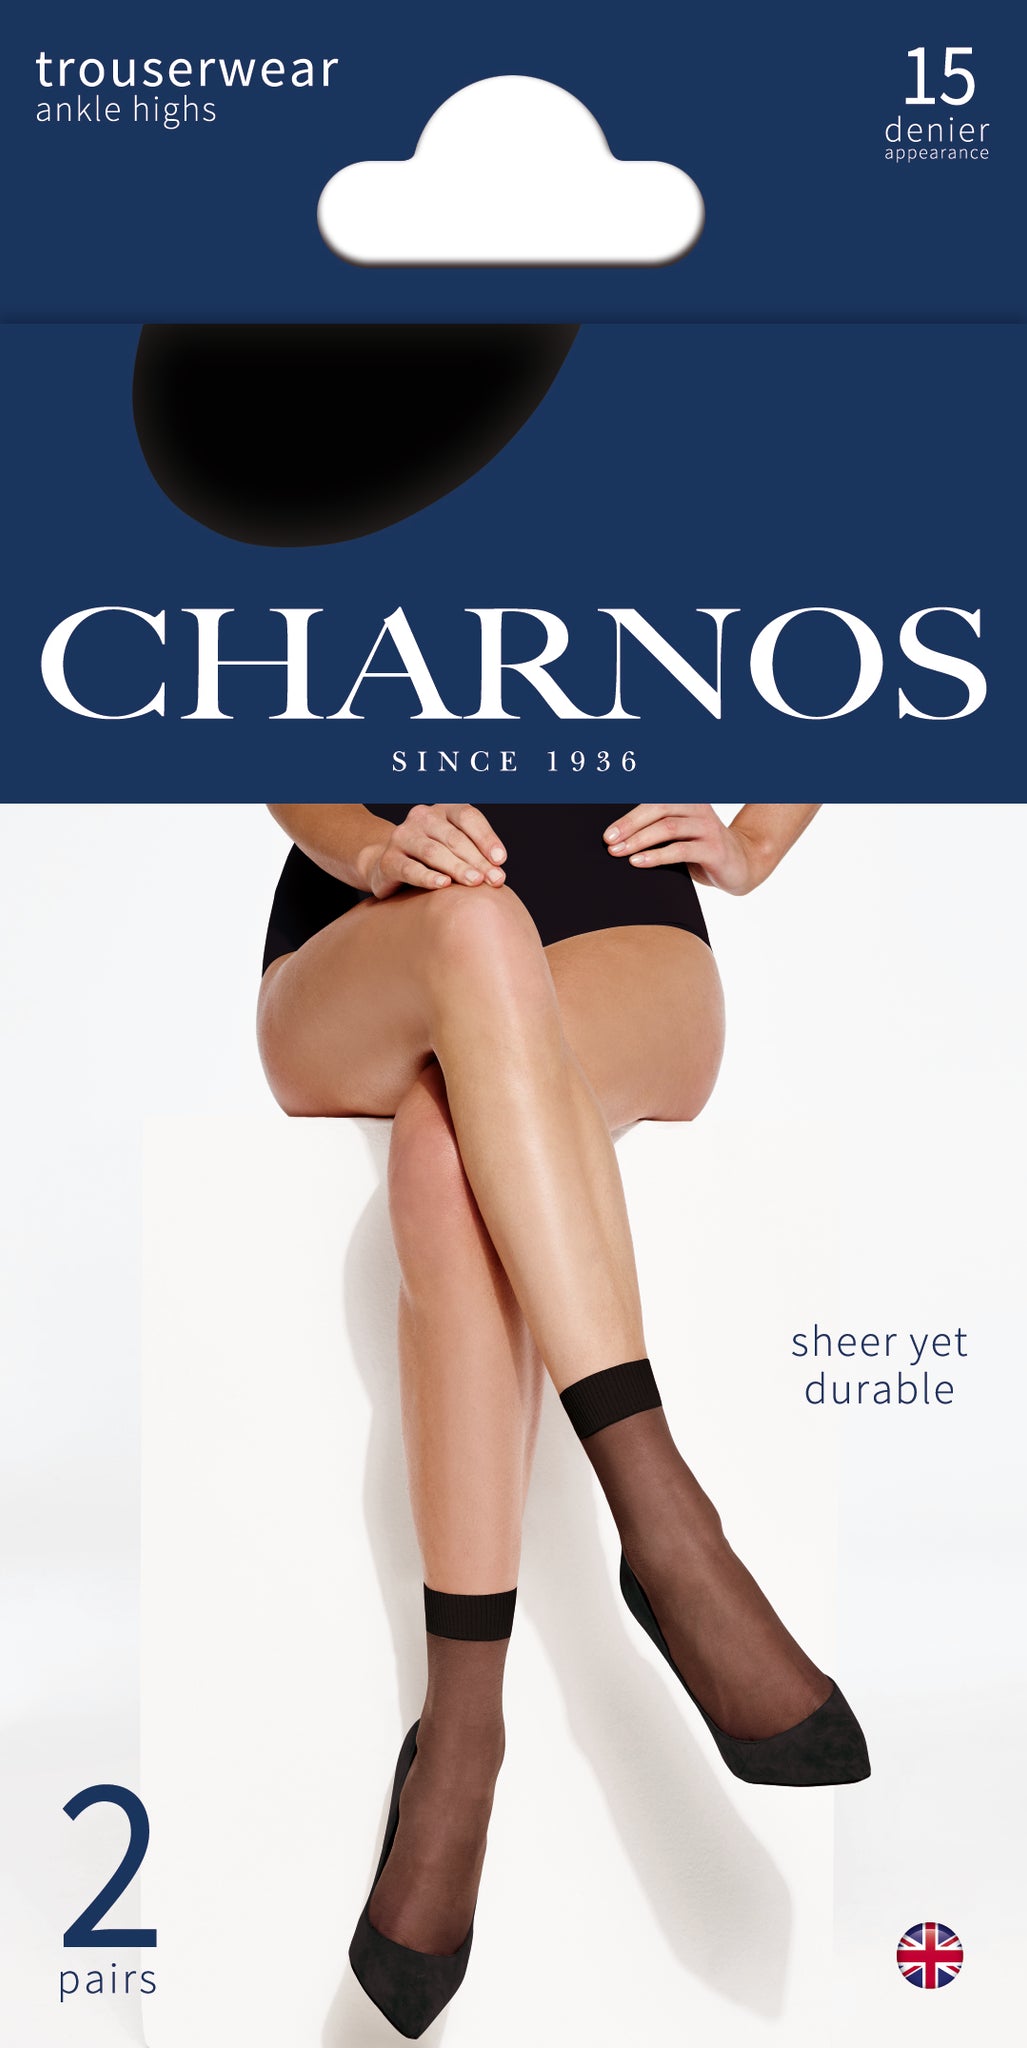 Charnos 15den sheer ankle highs 2pp